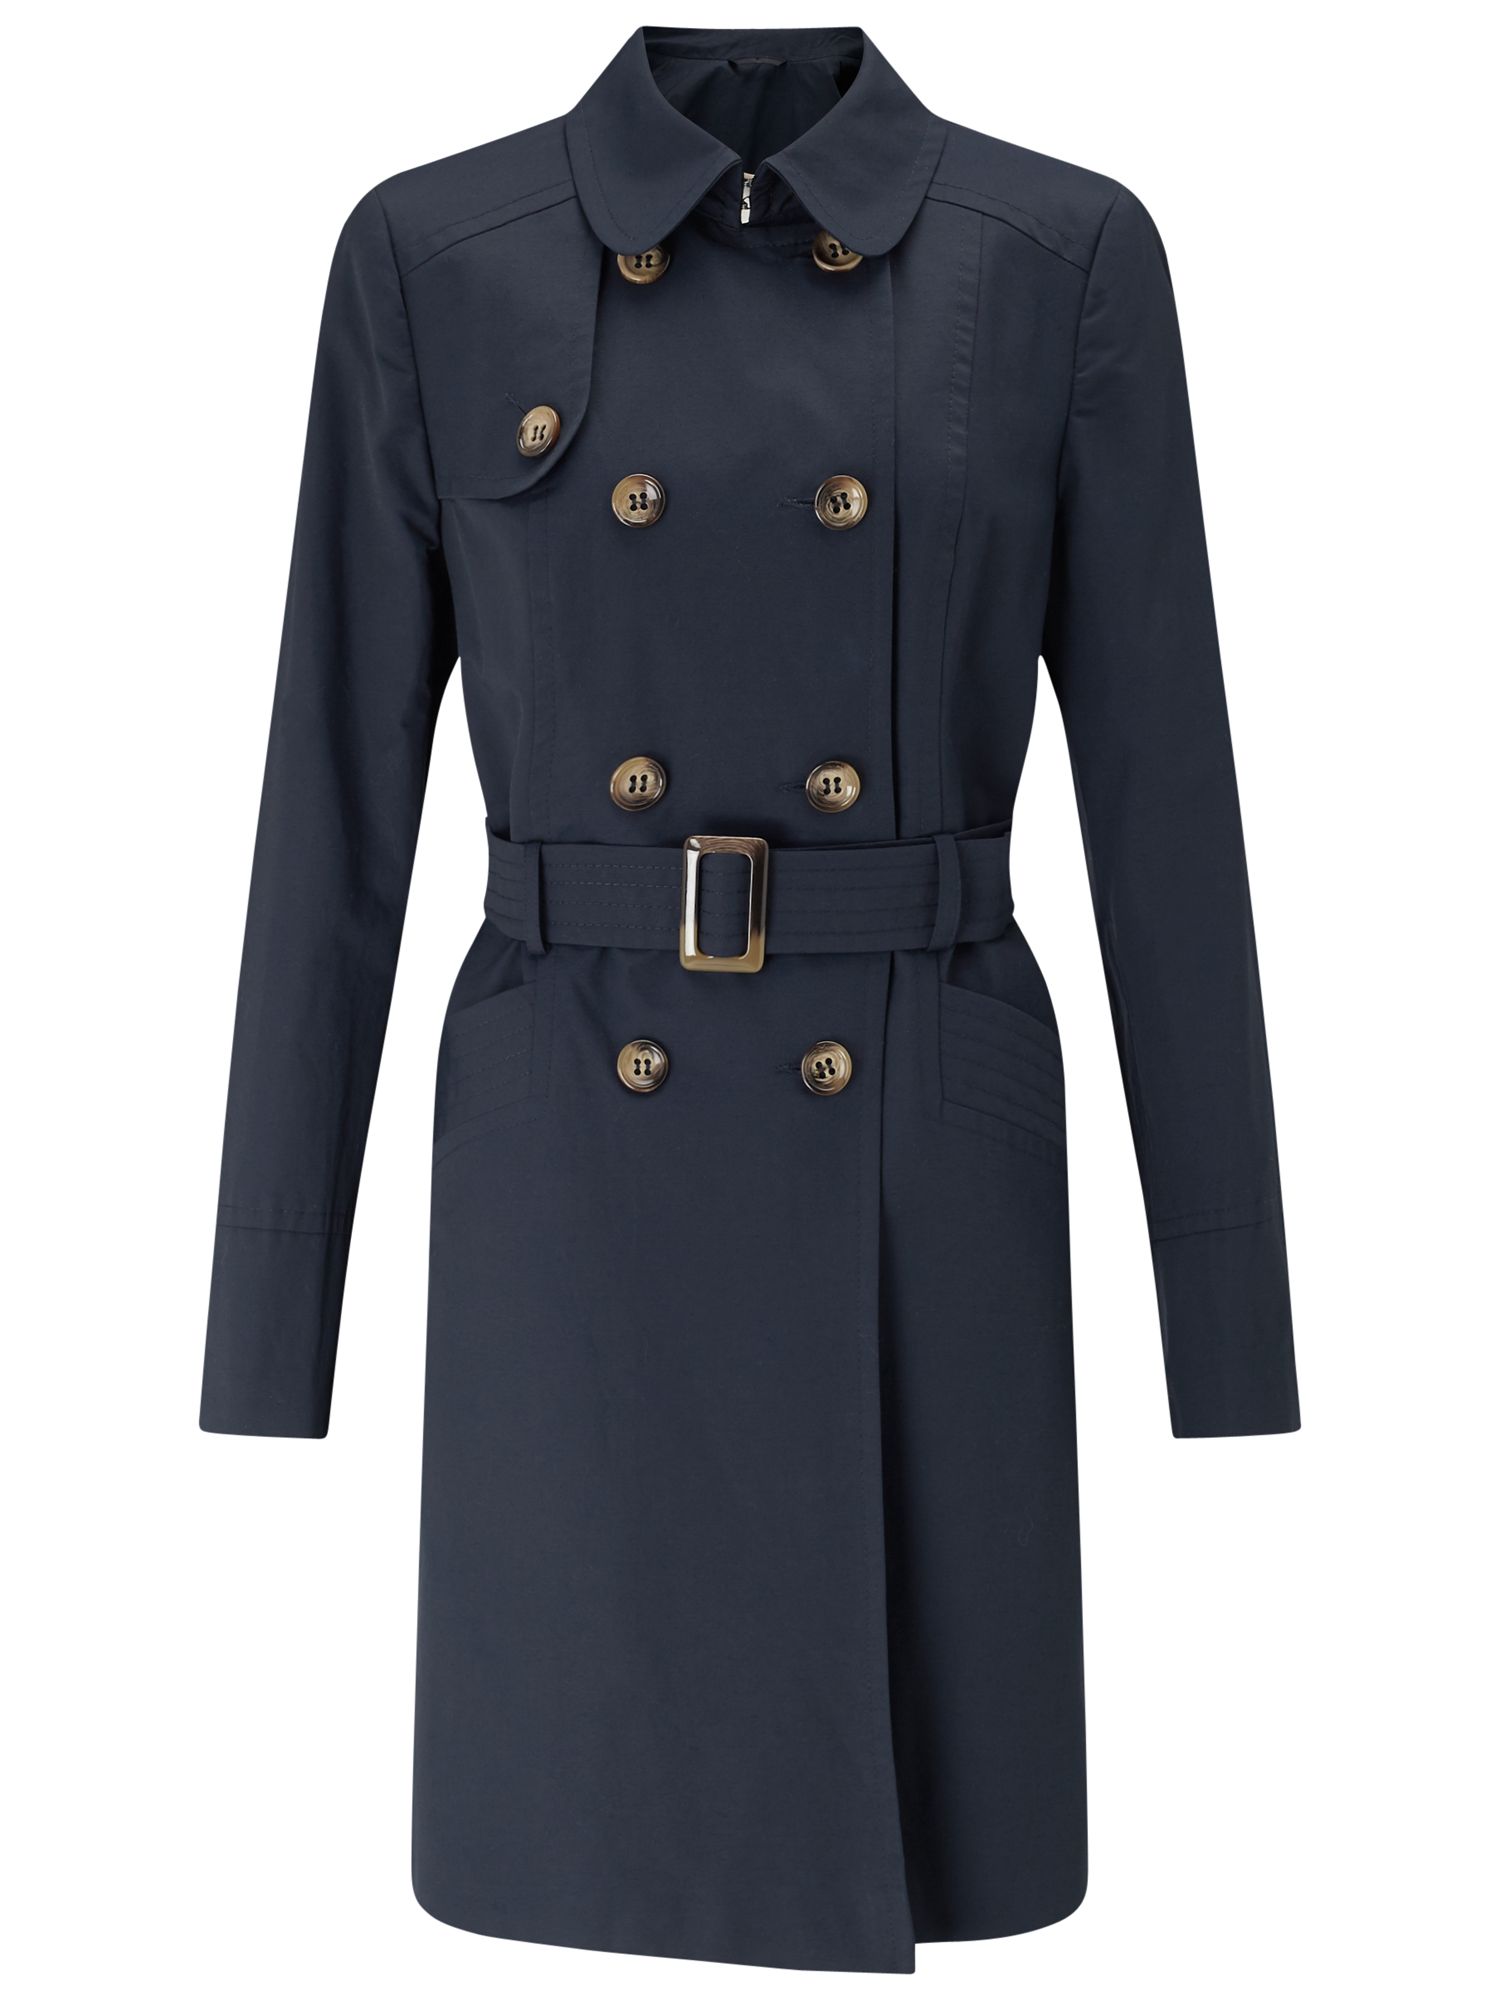 Miss Selfridge Trench Coat, Navy at John Lewis & Partners